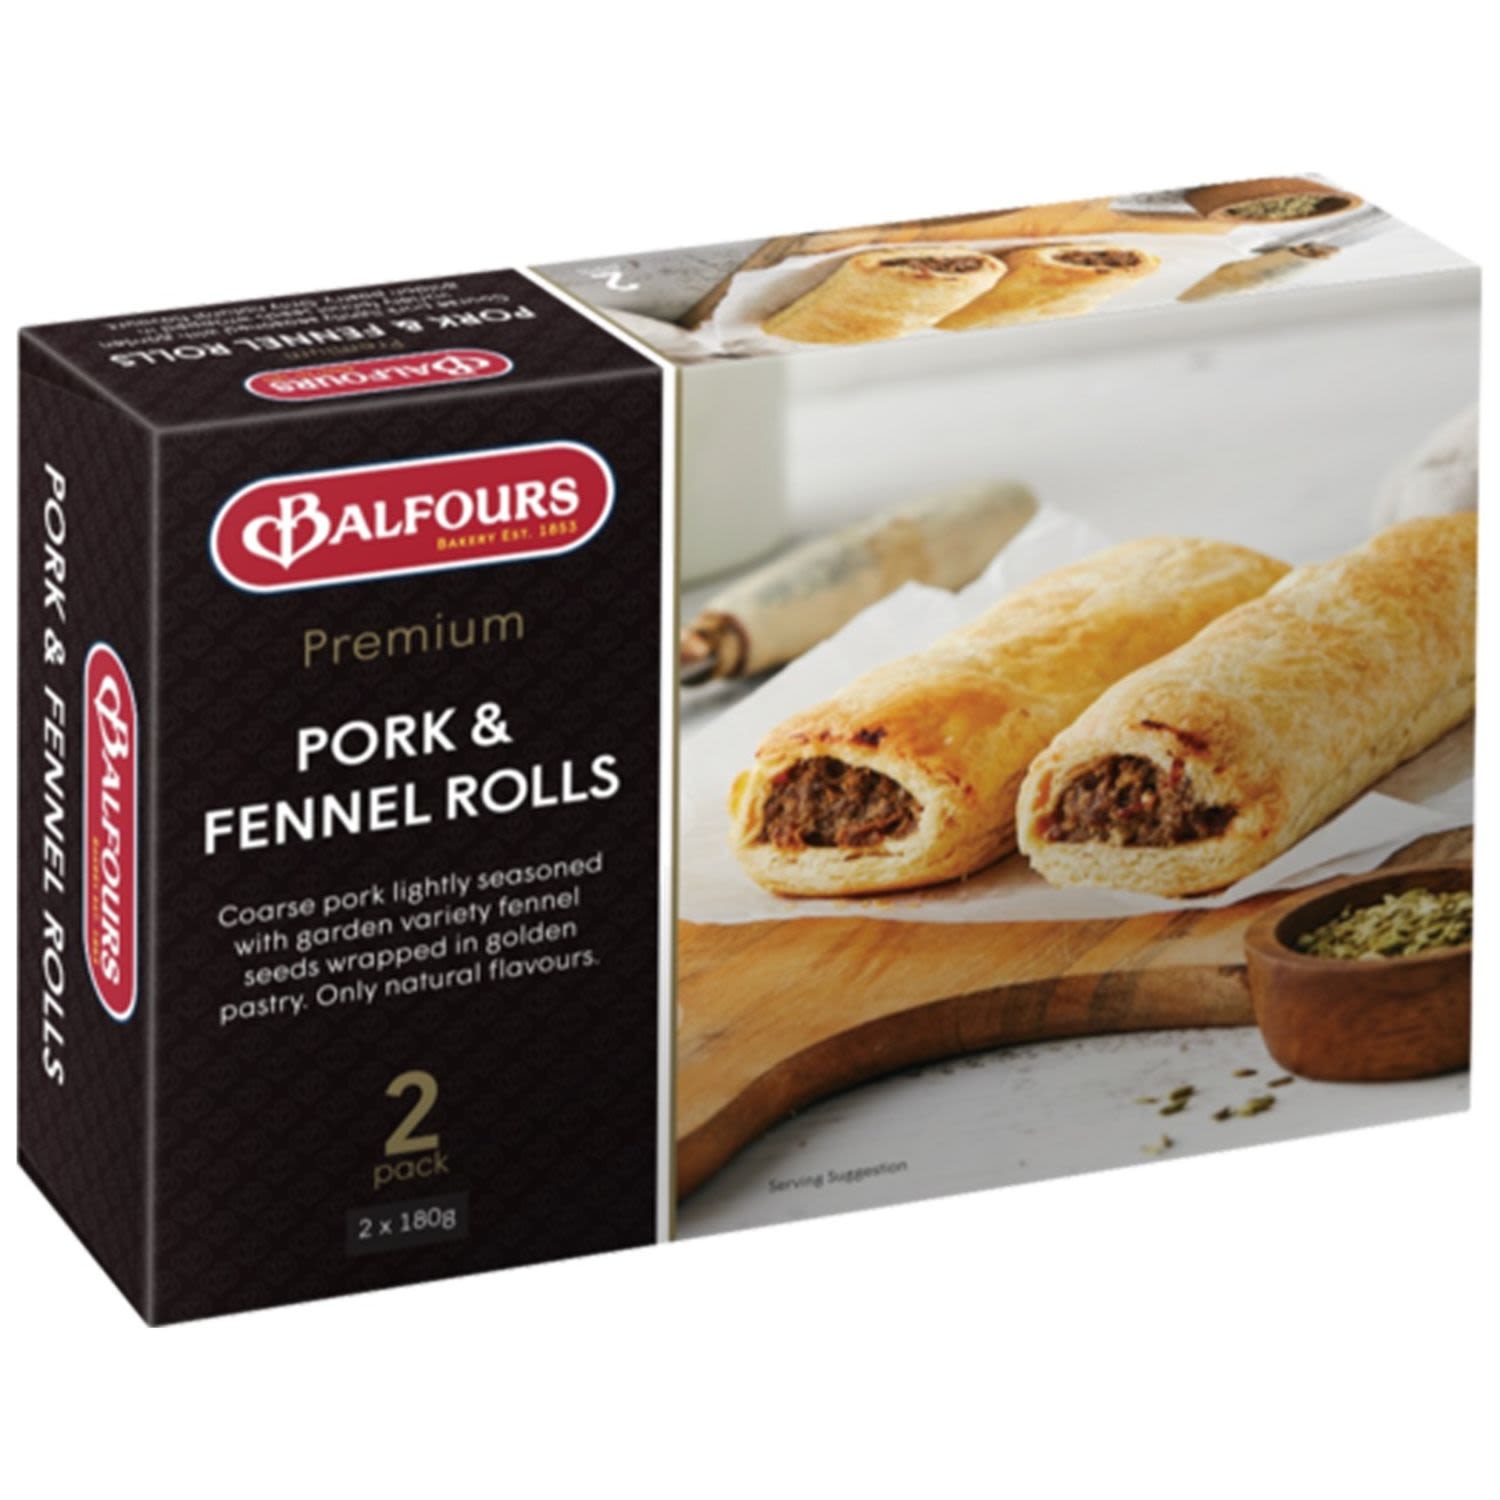 Balfours Roll Premium Pork & Fennel, 2 Each